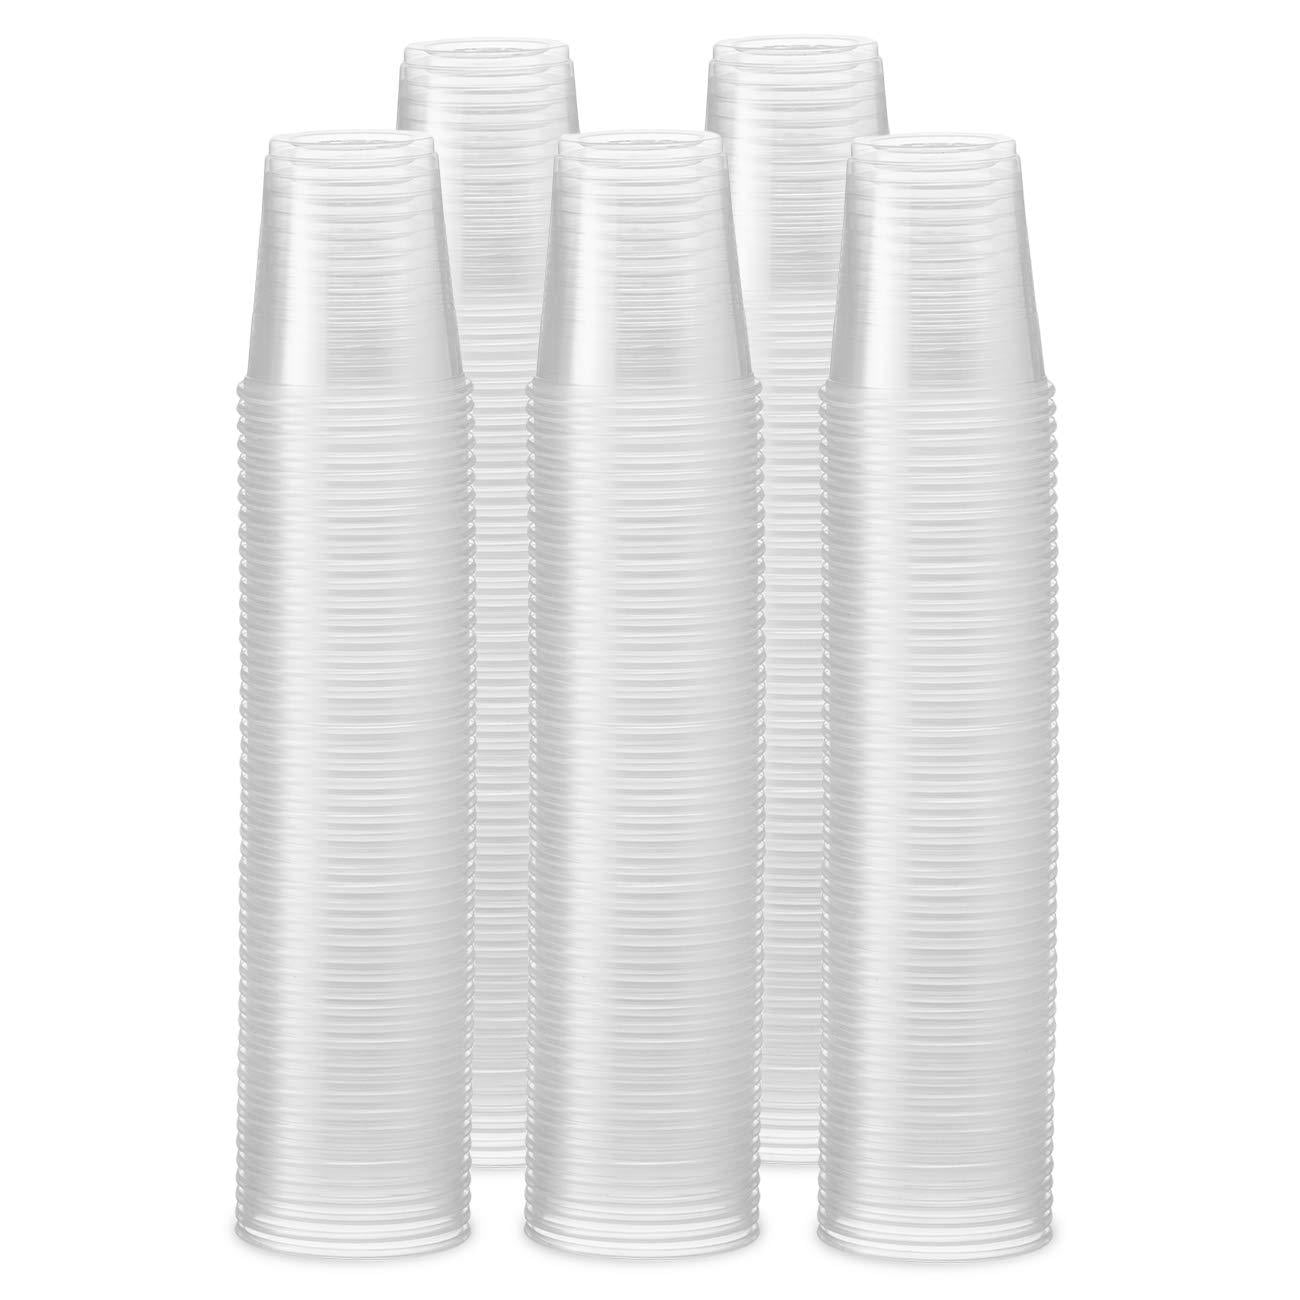 Lot of 120 Clear Plastic 3oz Cups Bathroom Rinse 